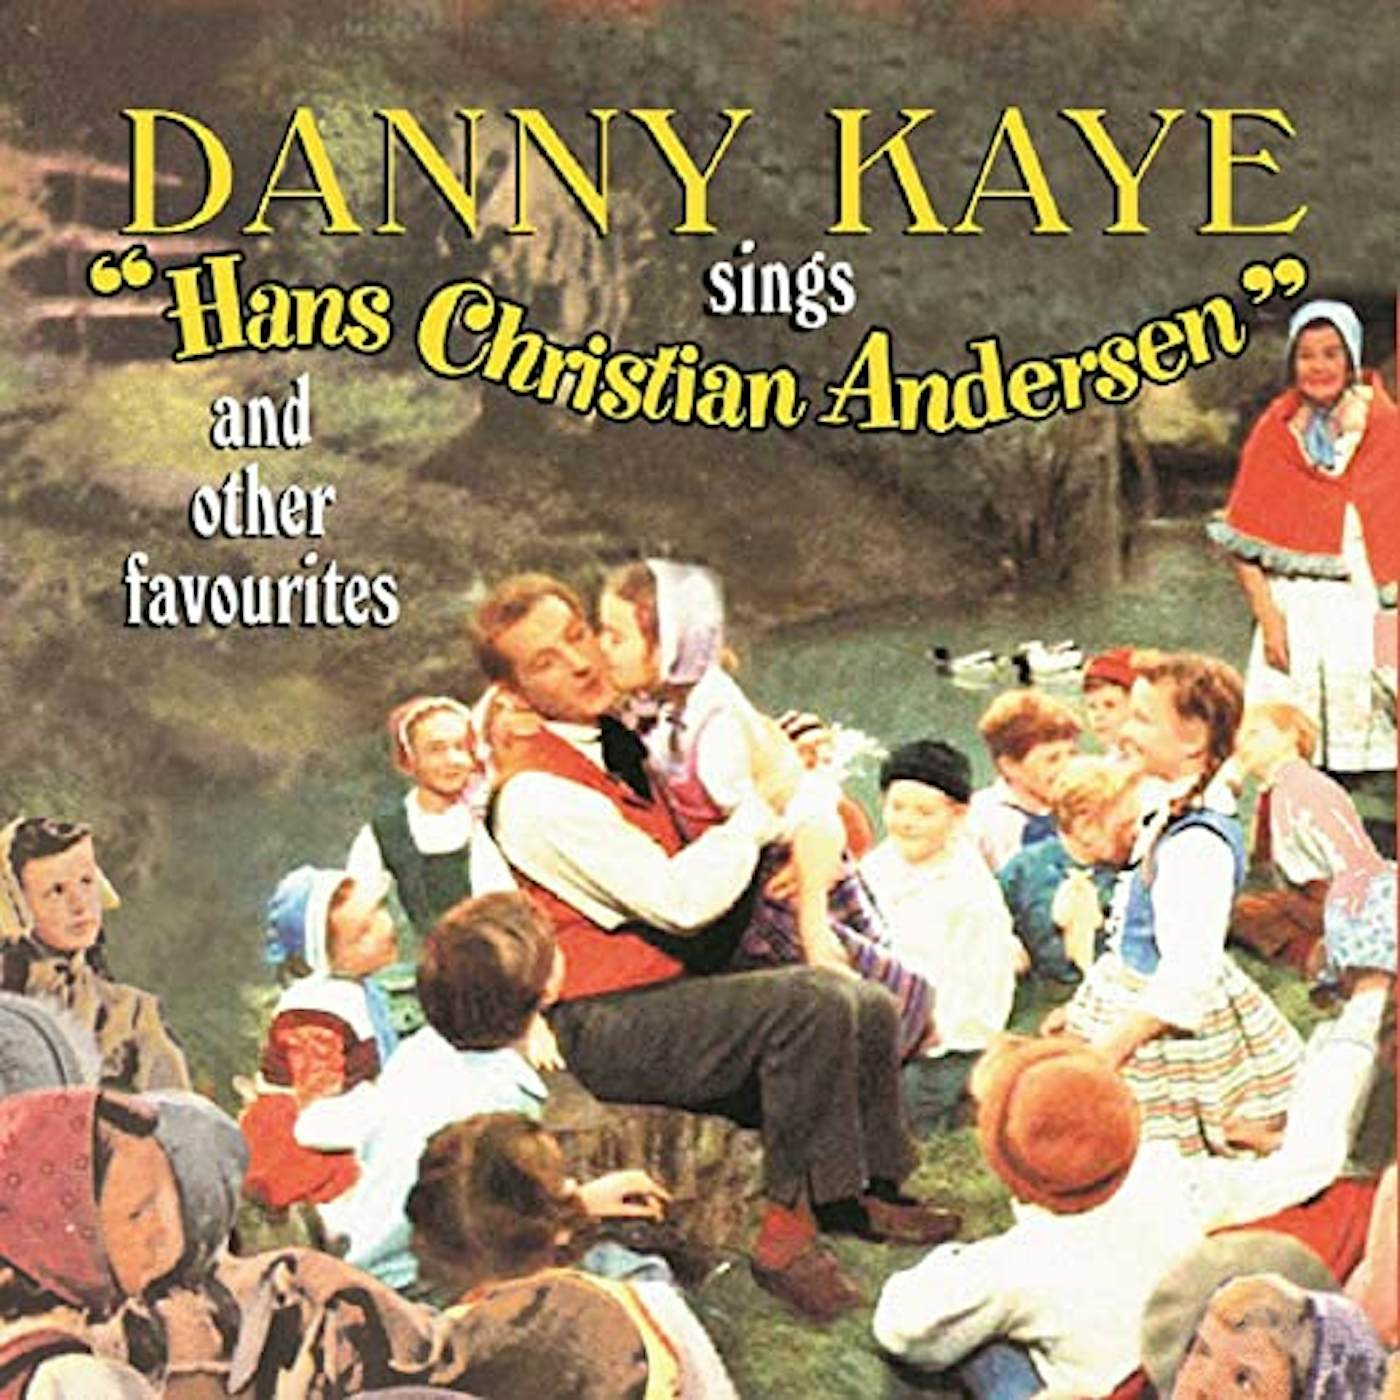 Danny Kaye SELECTIONS FROM HANS CHRISTIAN ANDERSEN CD